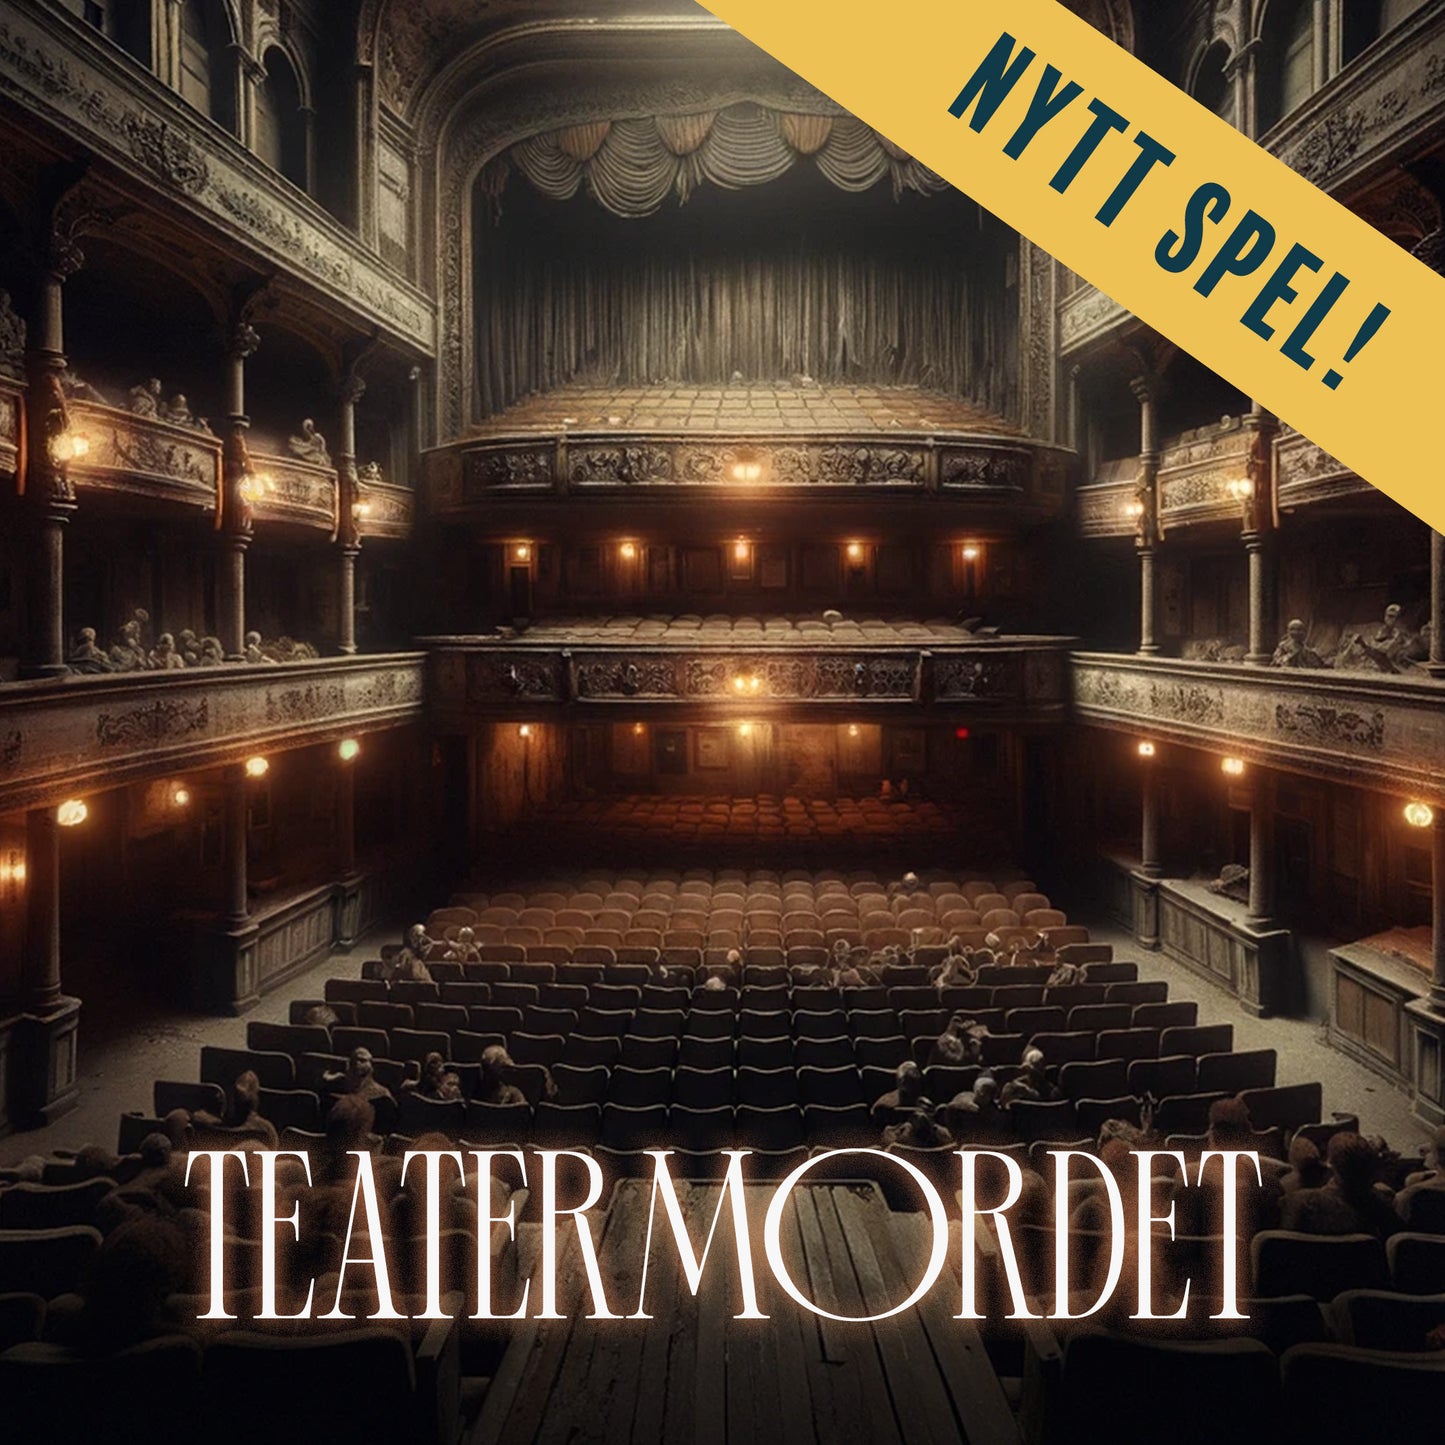 Released soon - Teatermordet